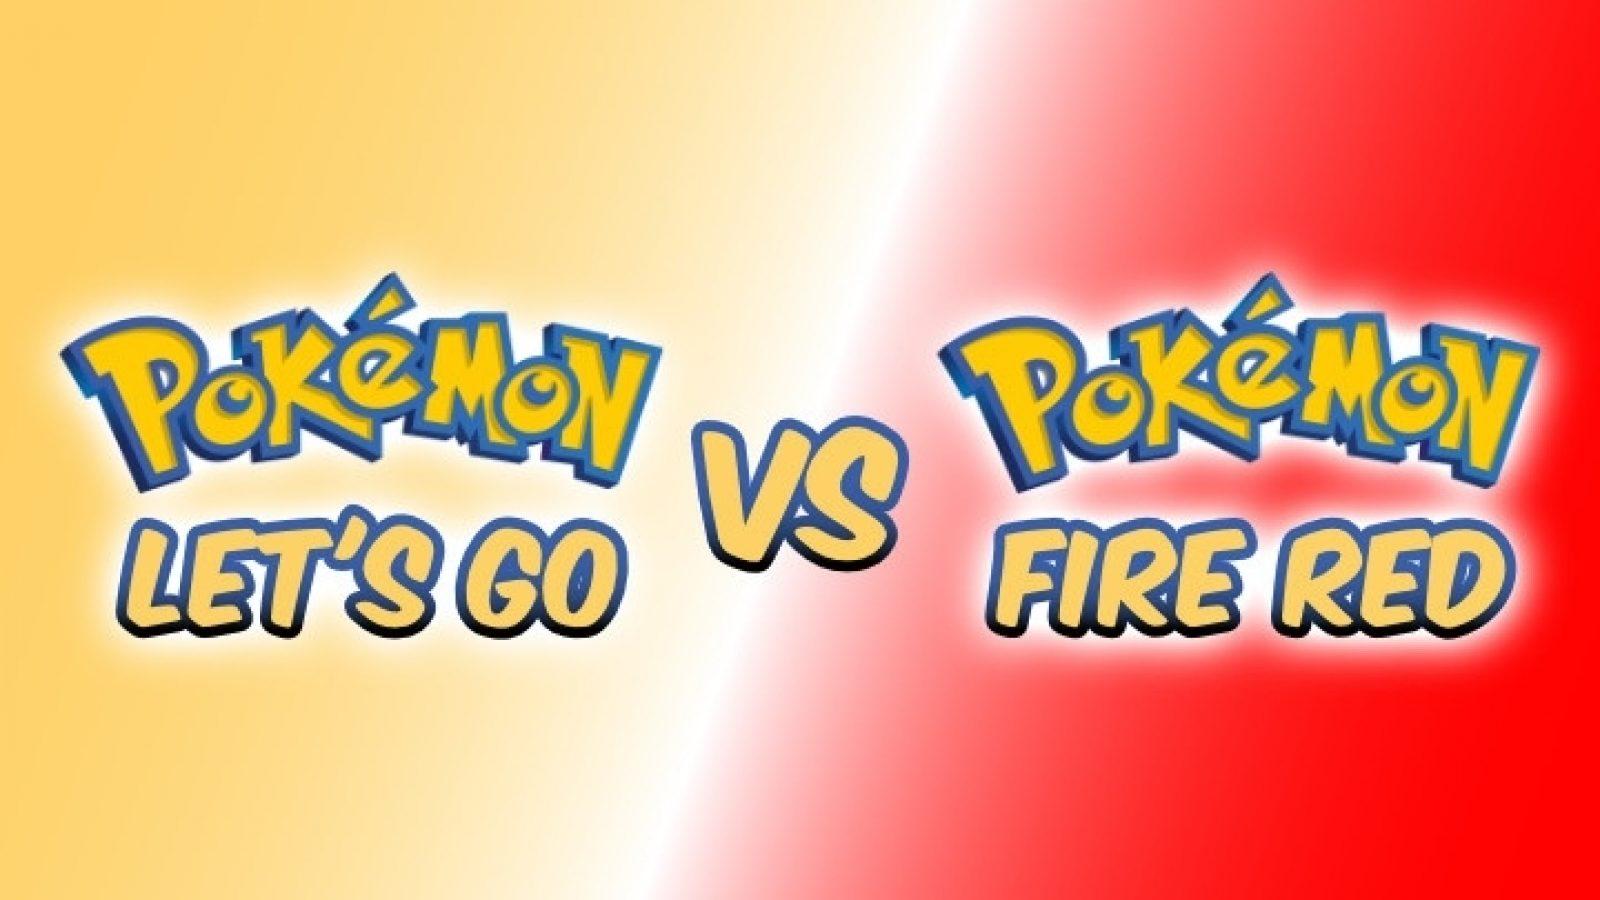 Pokémon Let's Go: 4 Differences between Pokémon Let's Go and Pokémon FireRed  / LeafGreen